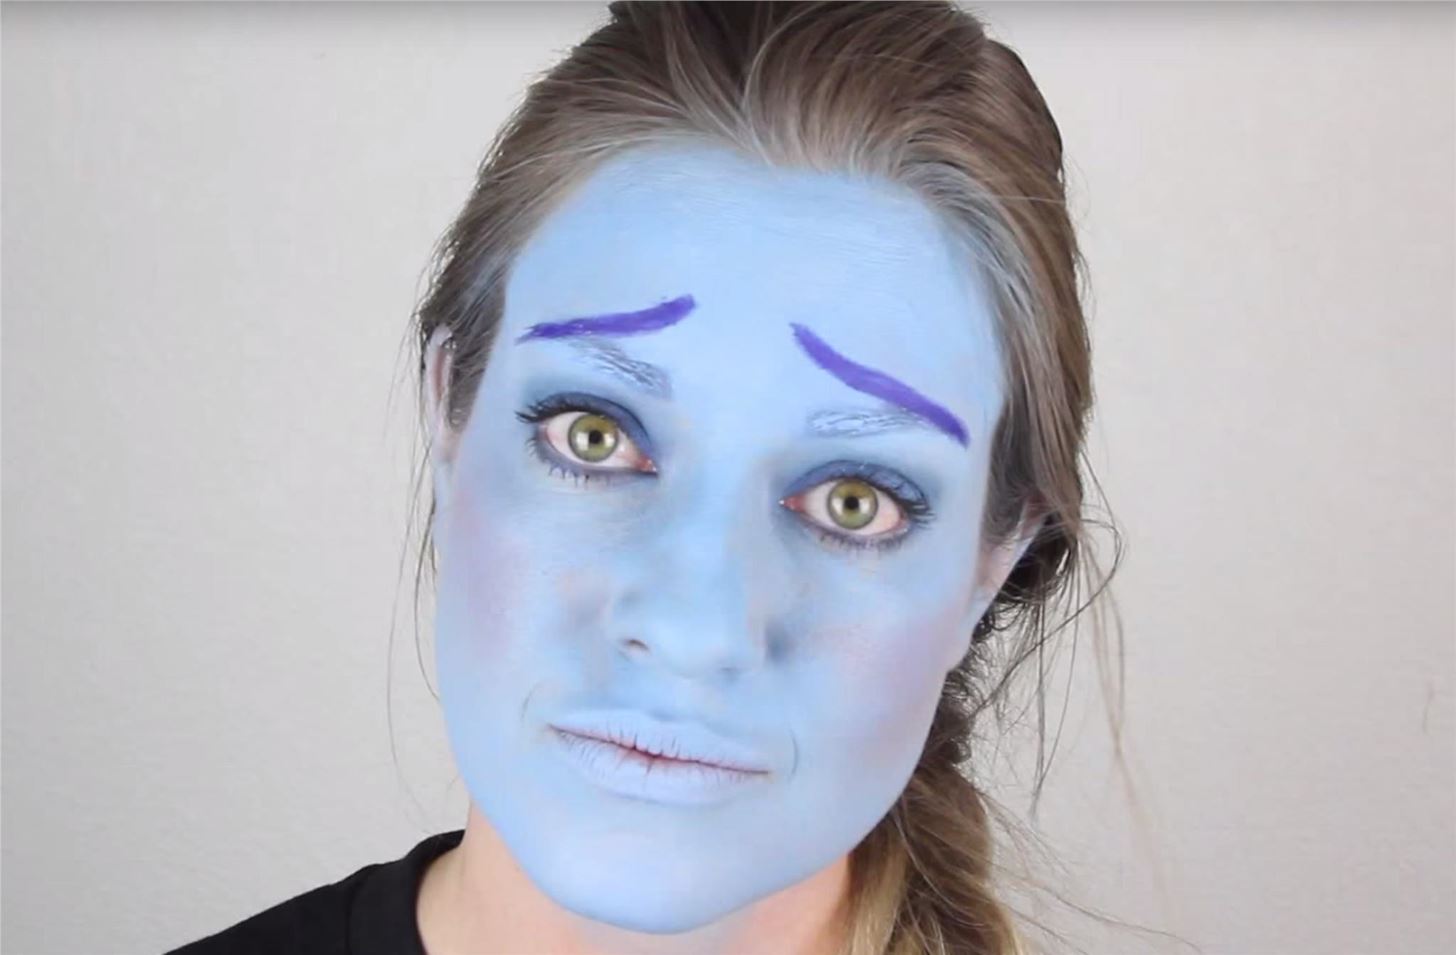 Inside Out: DIY Sadness Costume & Makeup for Halloween